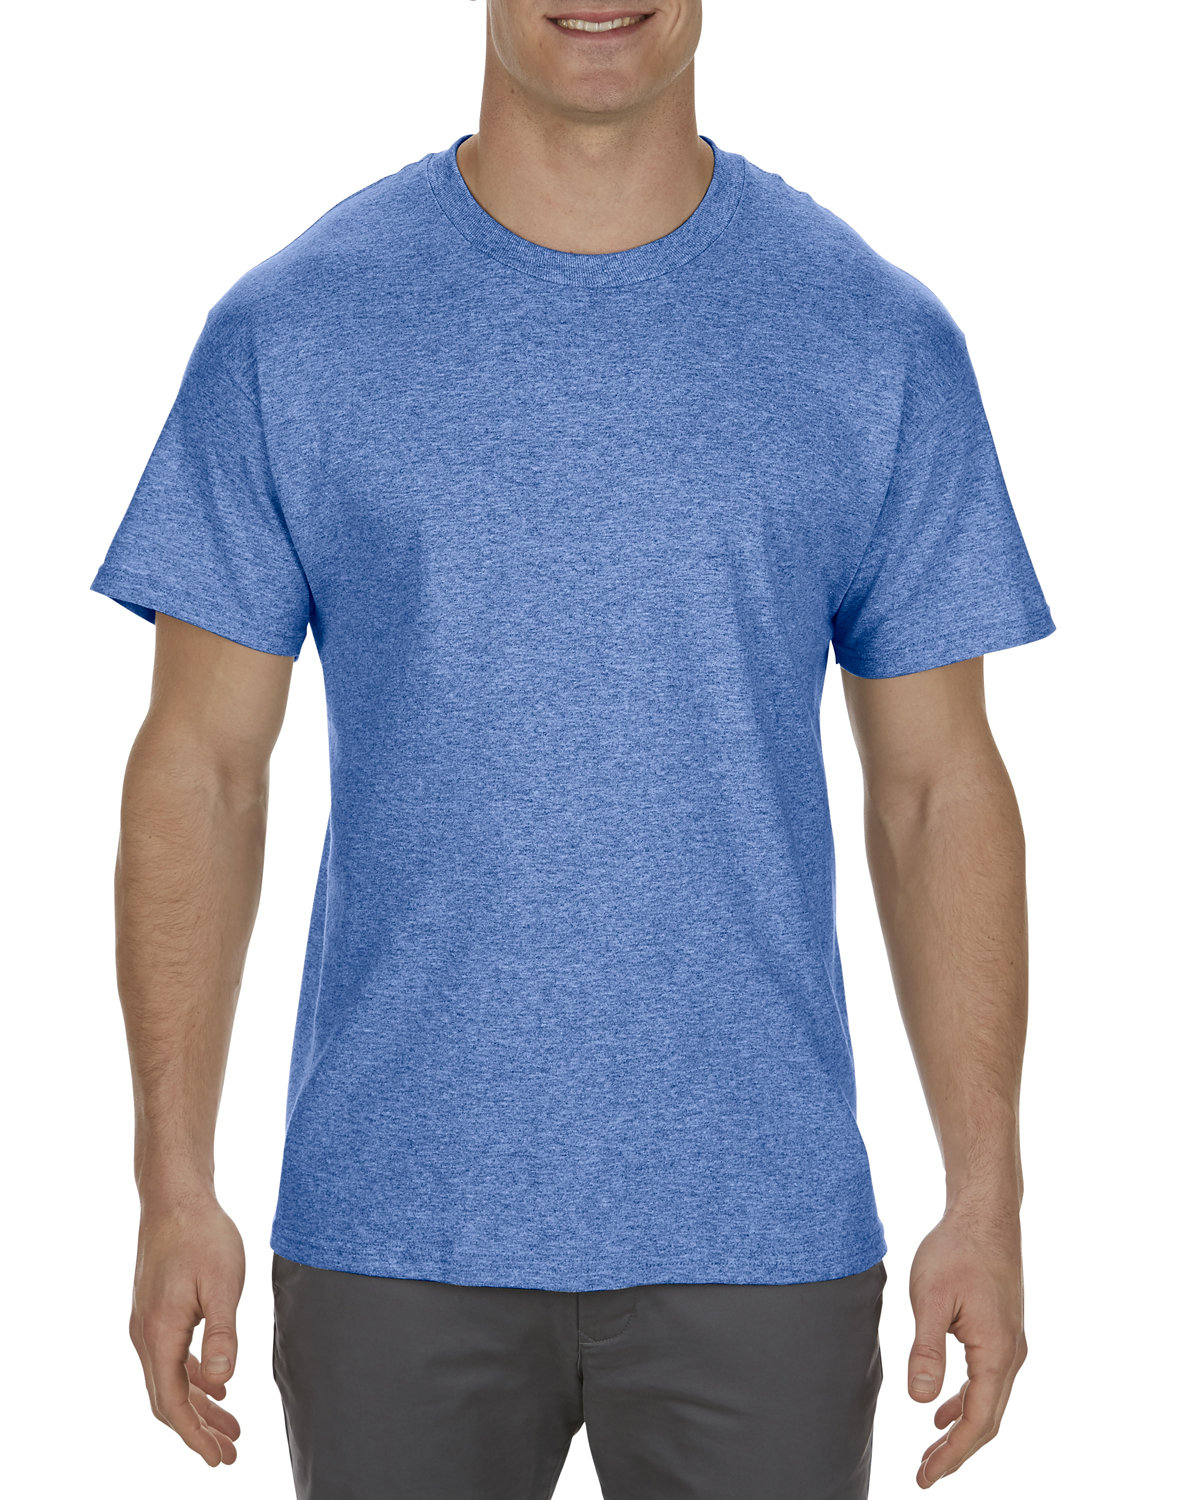 Alstyle Adult 5.1 oz., 100% Soft Spun Cotton T-Shirt ROYAL HEATHER 